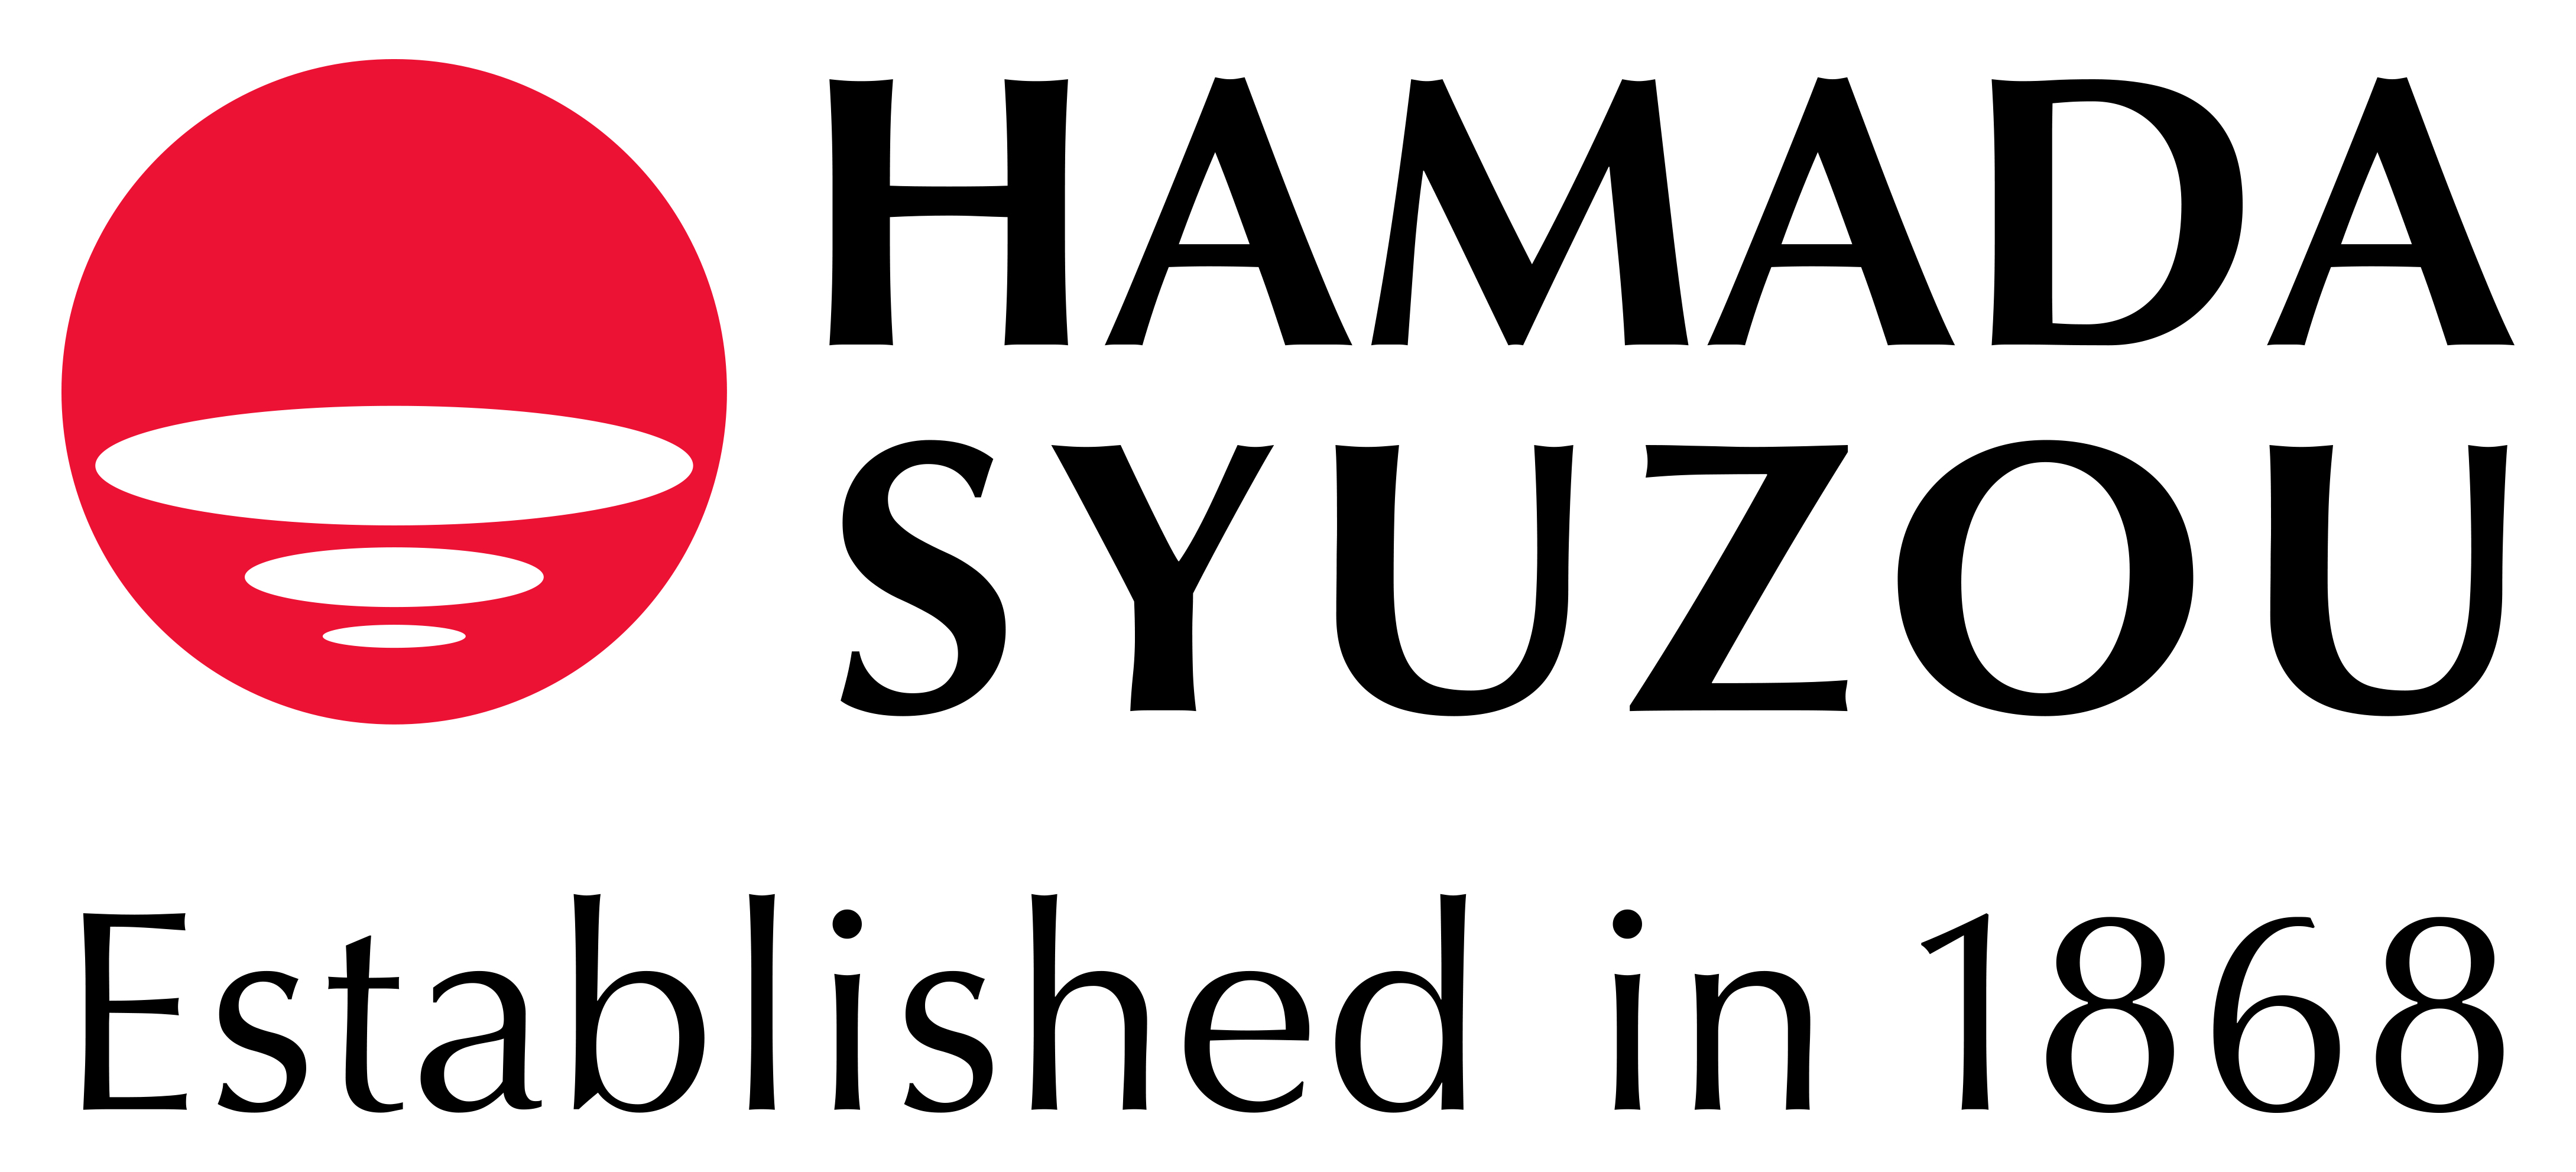 Hamada Syuzou Co., Ltd | HKTDC Sourcing